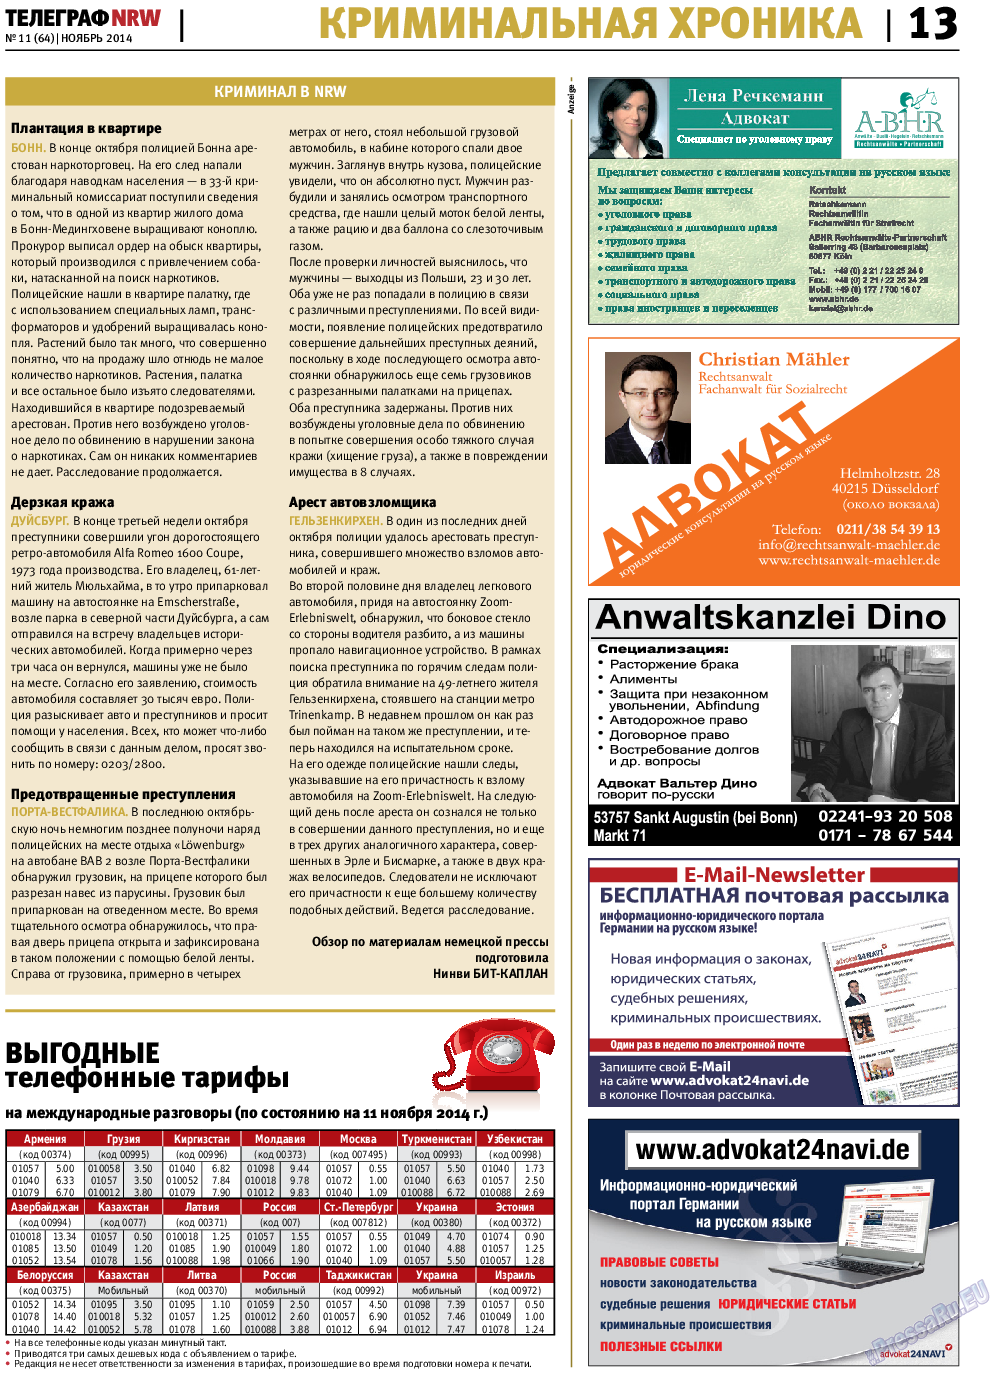 Телеграф NRW, газета. 2014 №11 стр.13